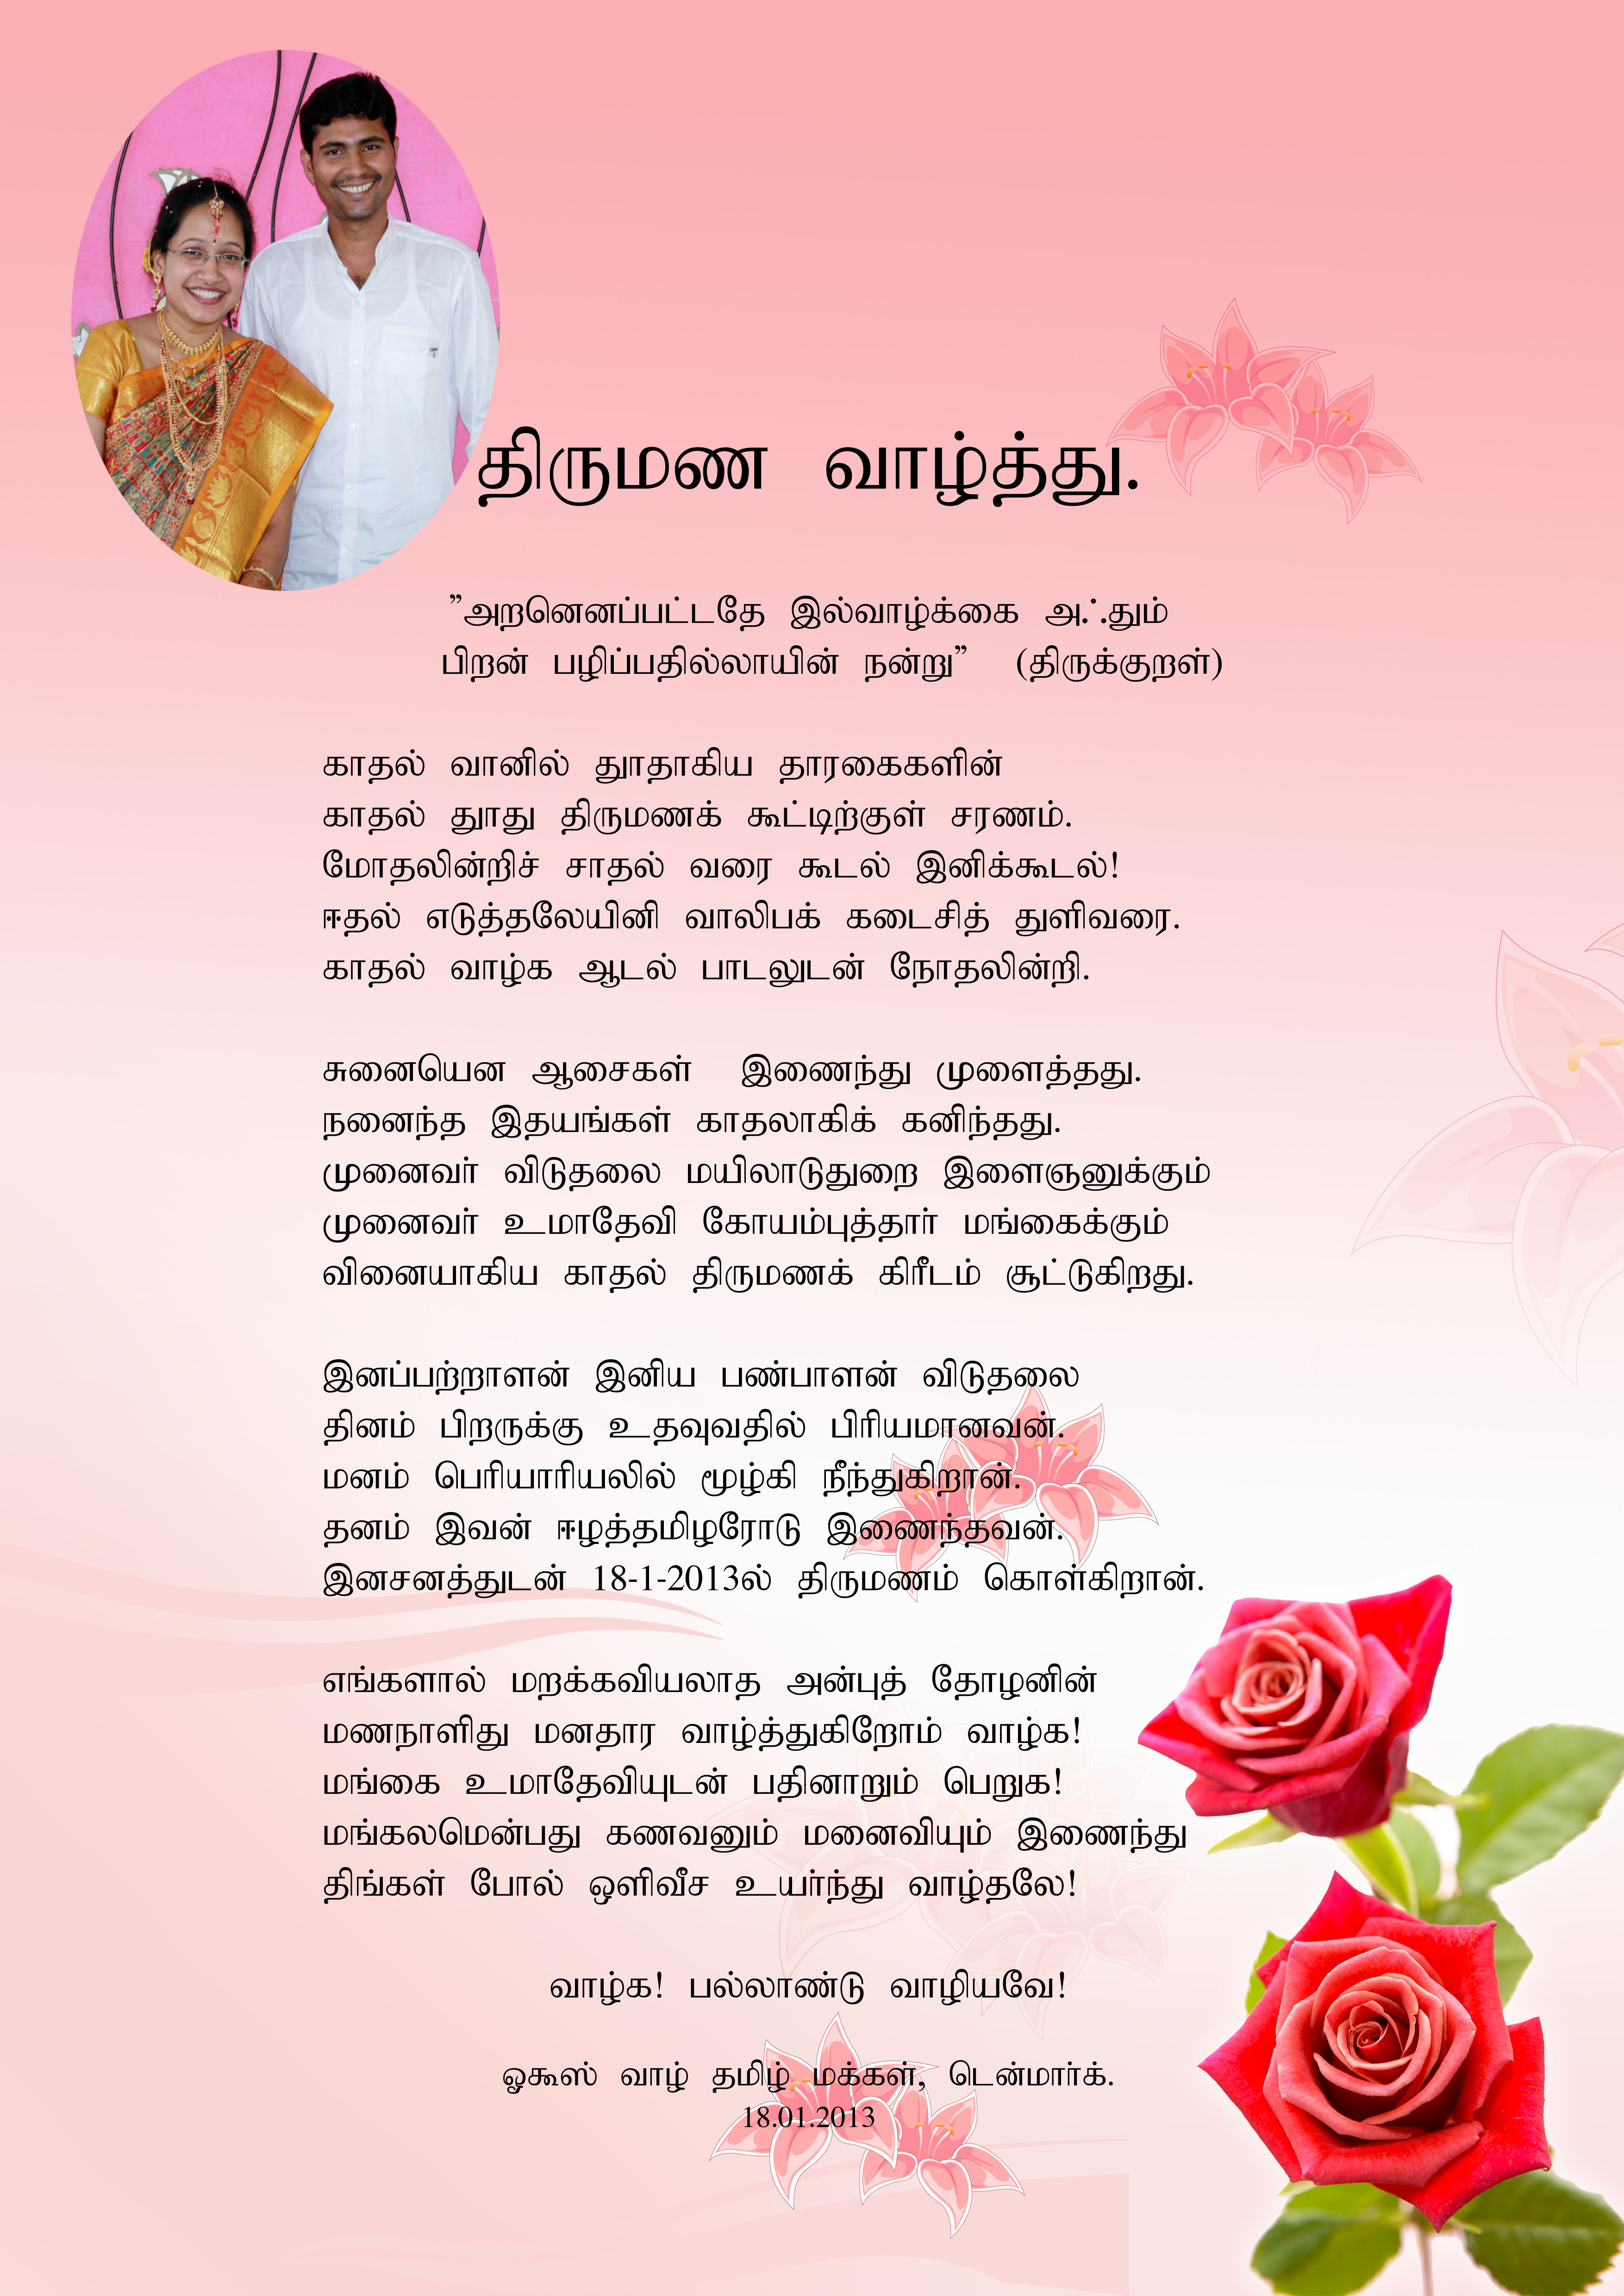 Thirumana Valthukkal In Tamil Words : For marriage 10 thirumana porutham me...